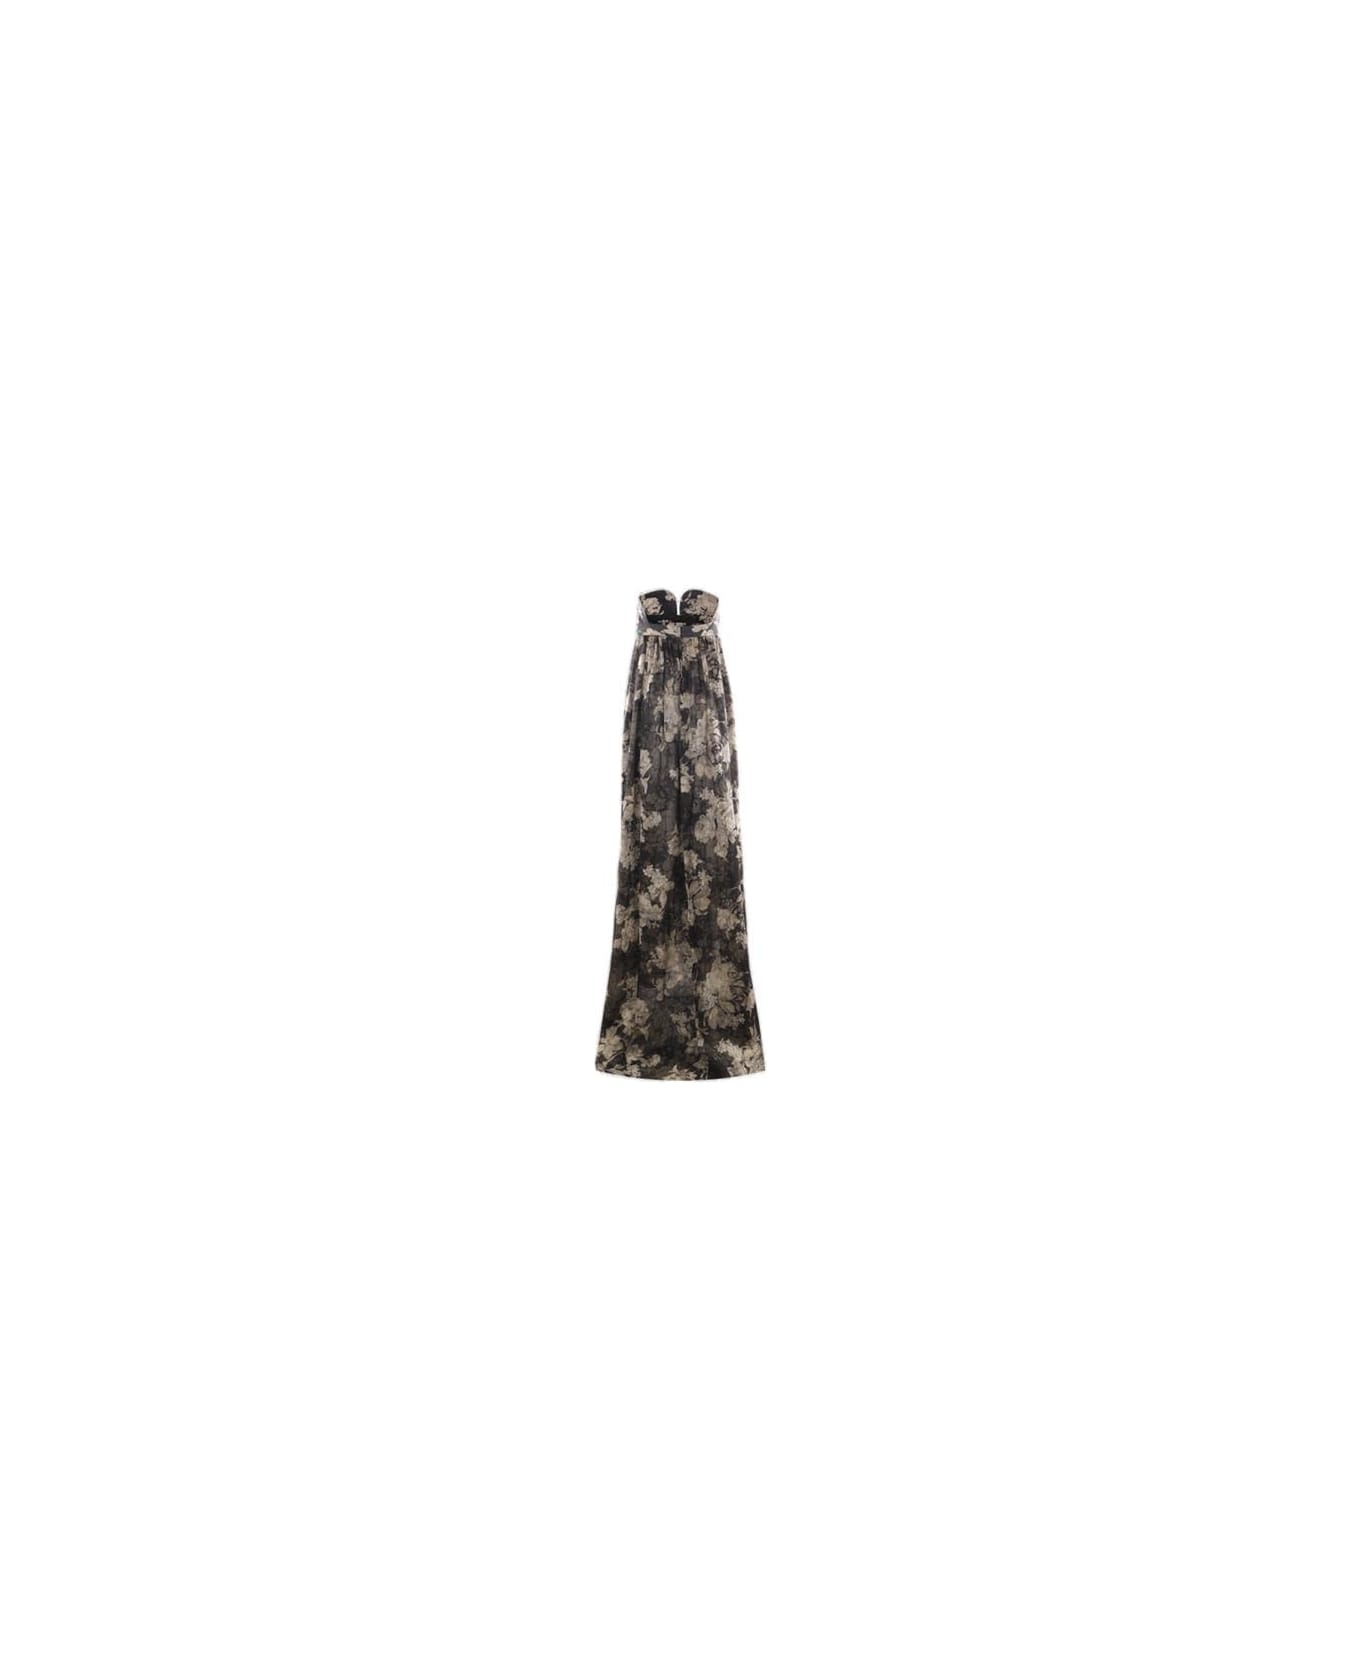 Max Mara Floral Printed Strapless Dress - Nero/kaki